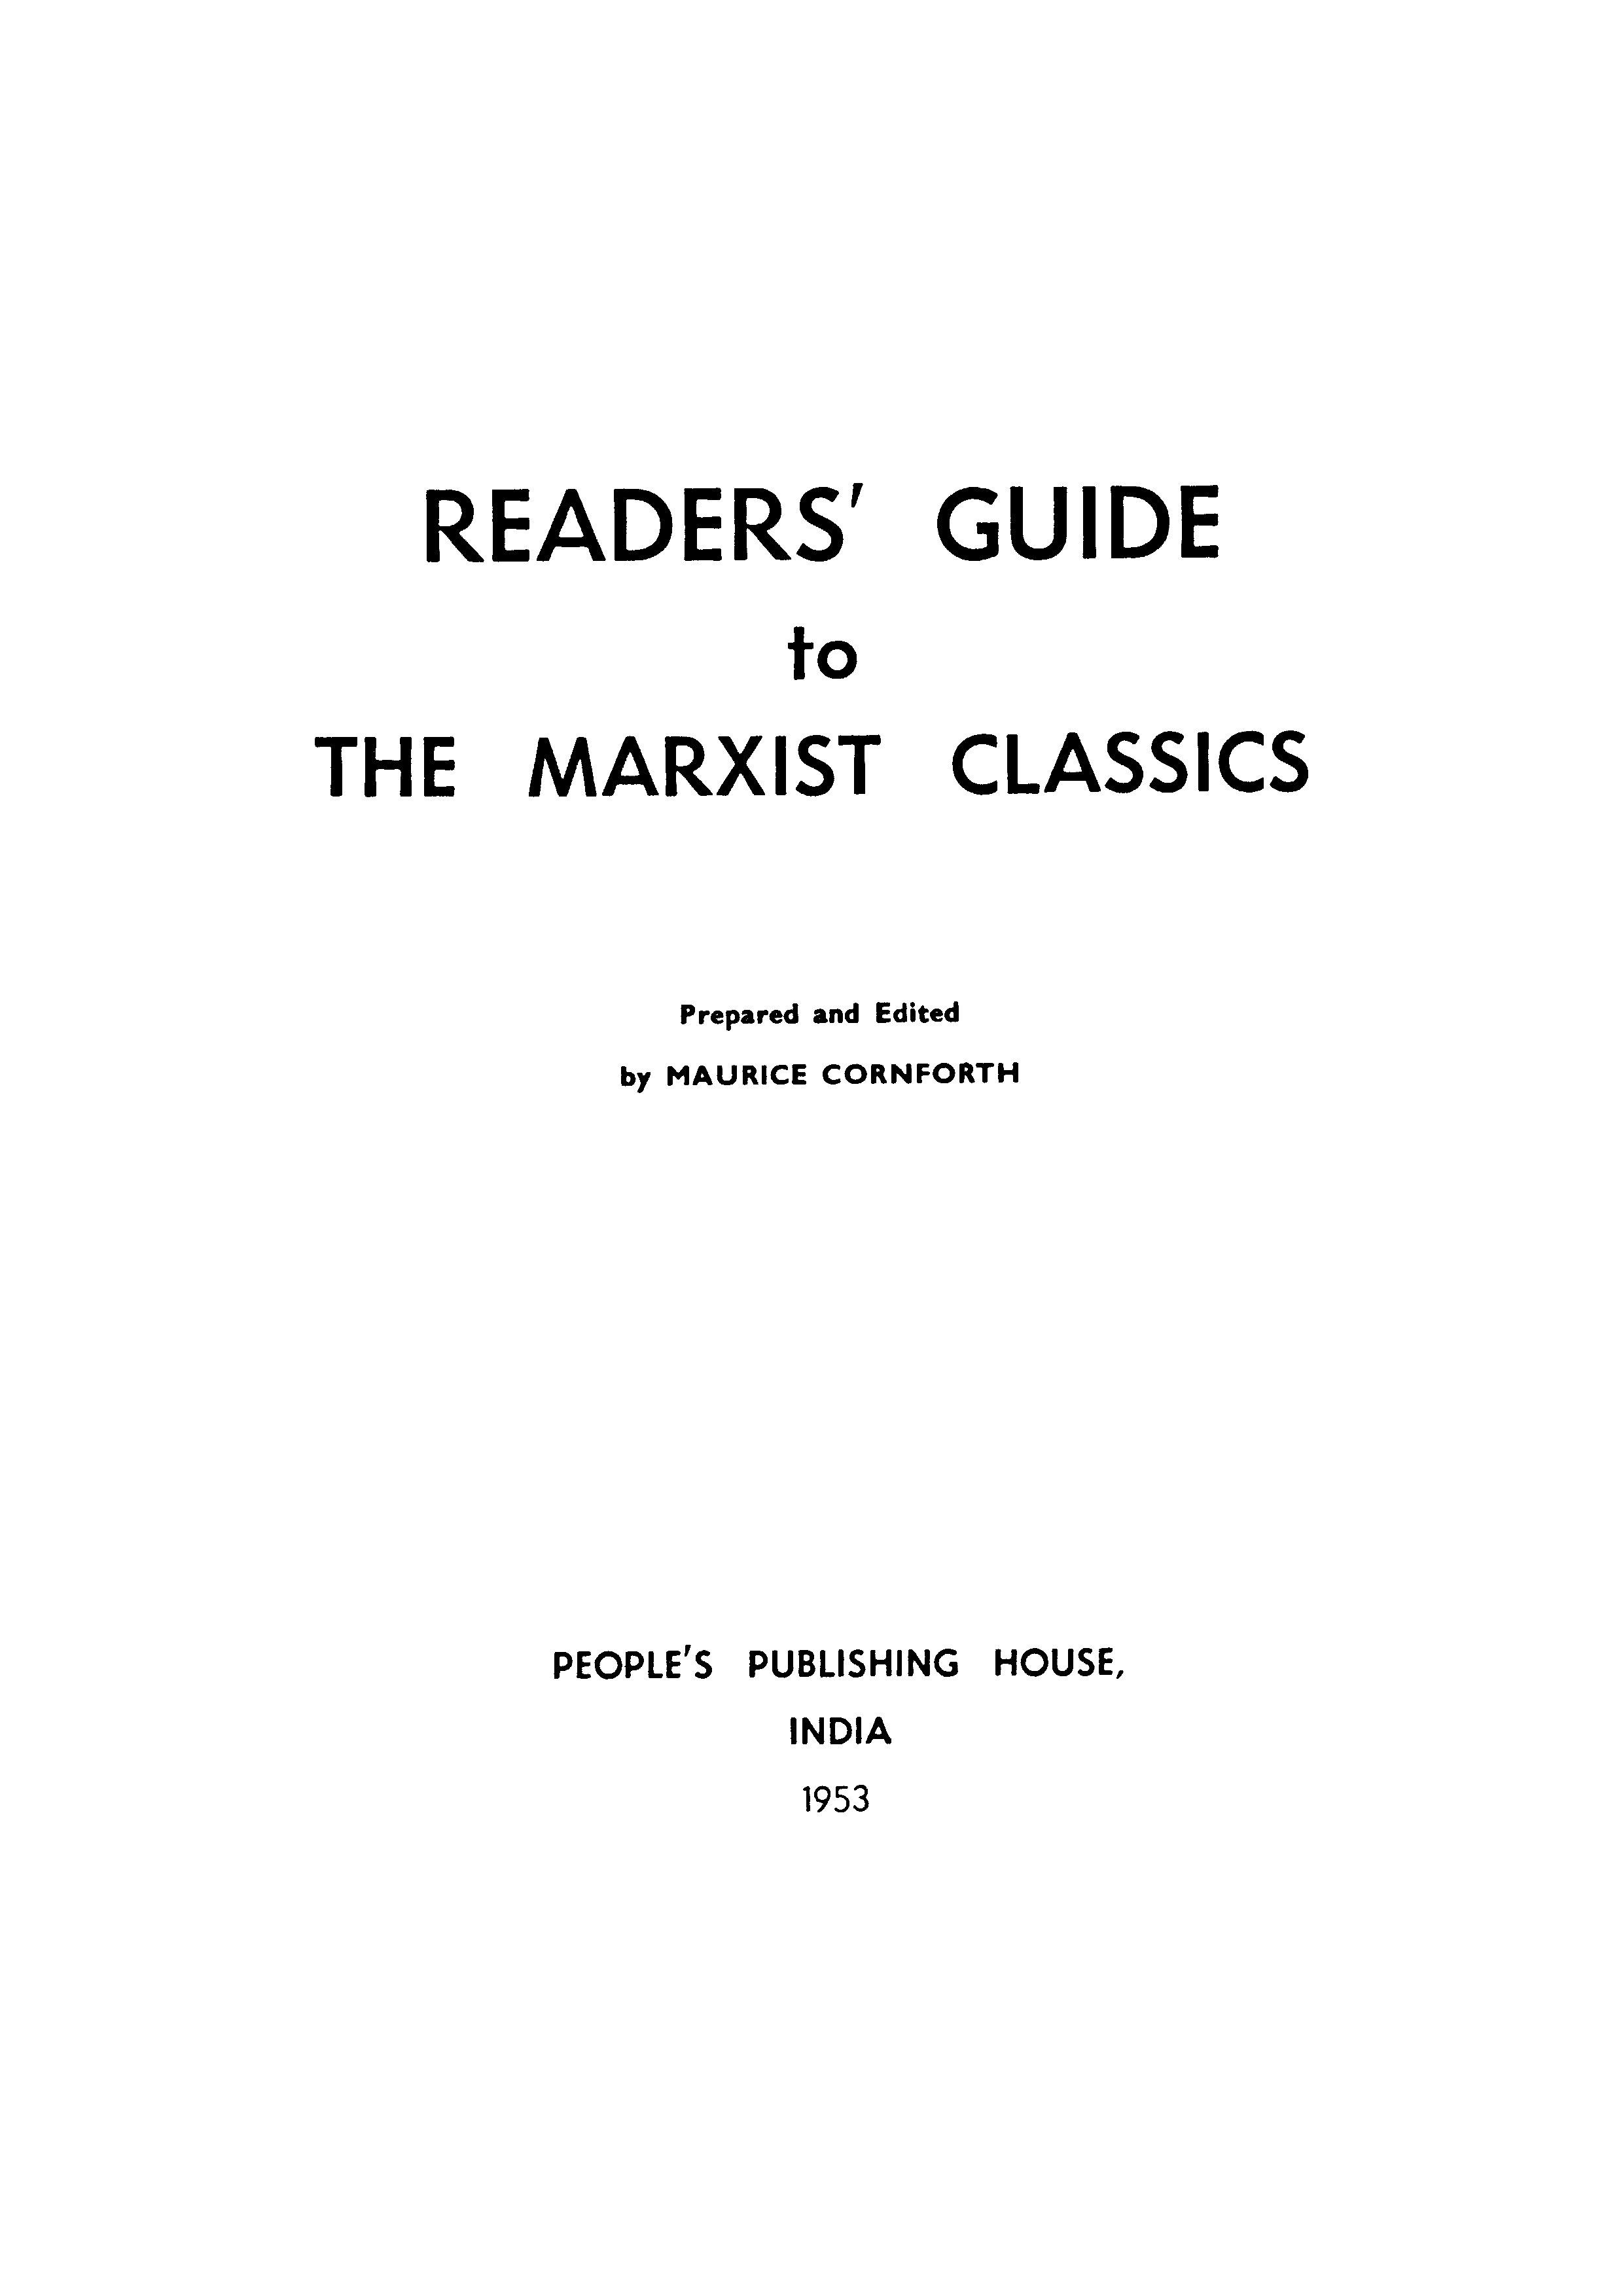 Reader's Guide The Marxist Classics